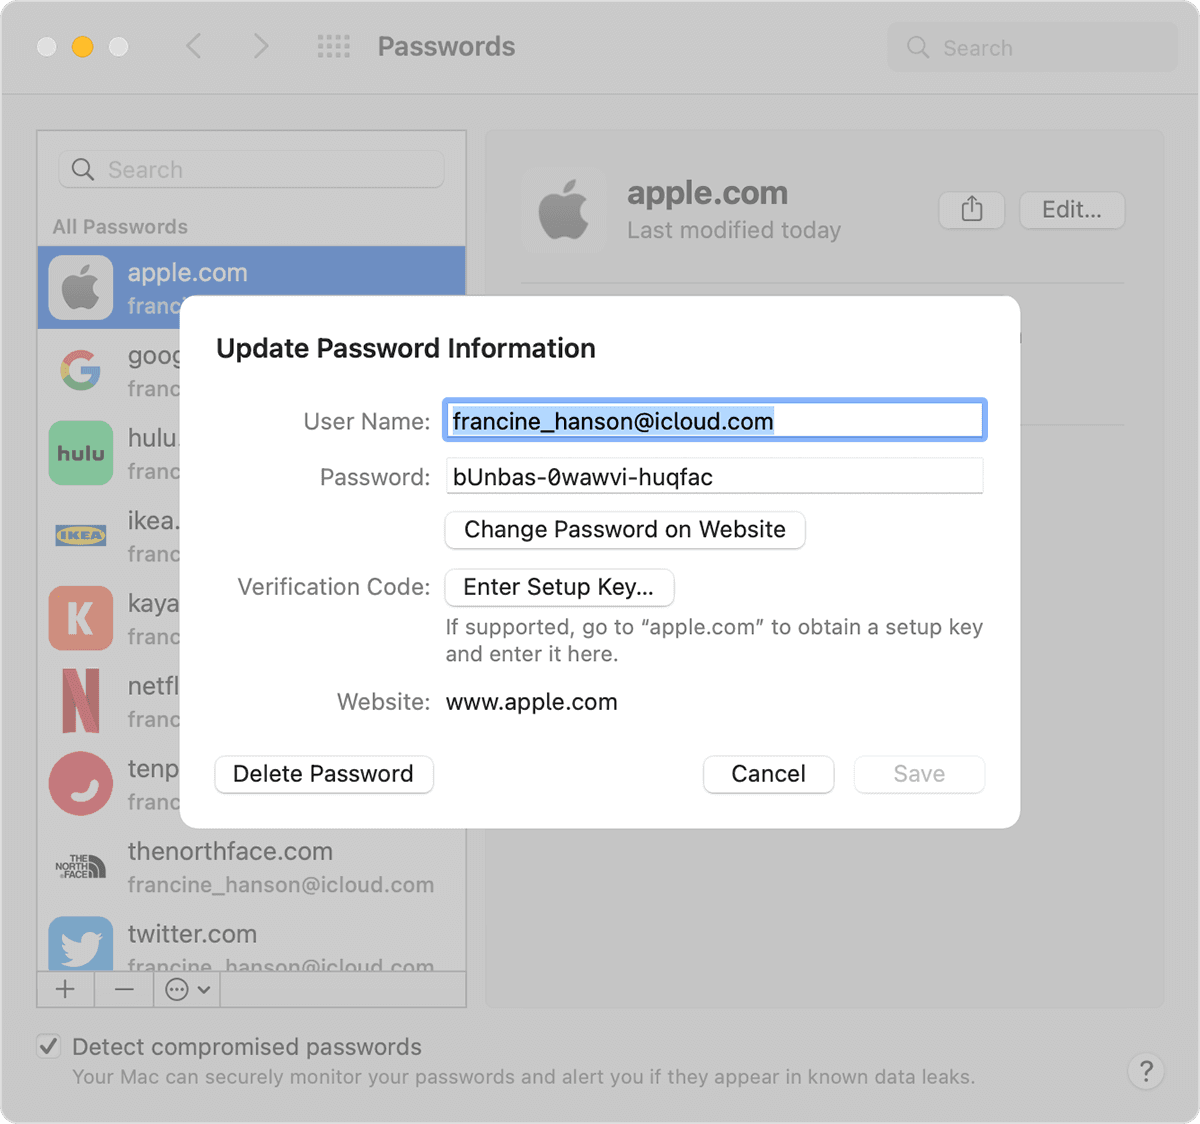 Update Password Information on Your Mac